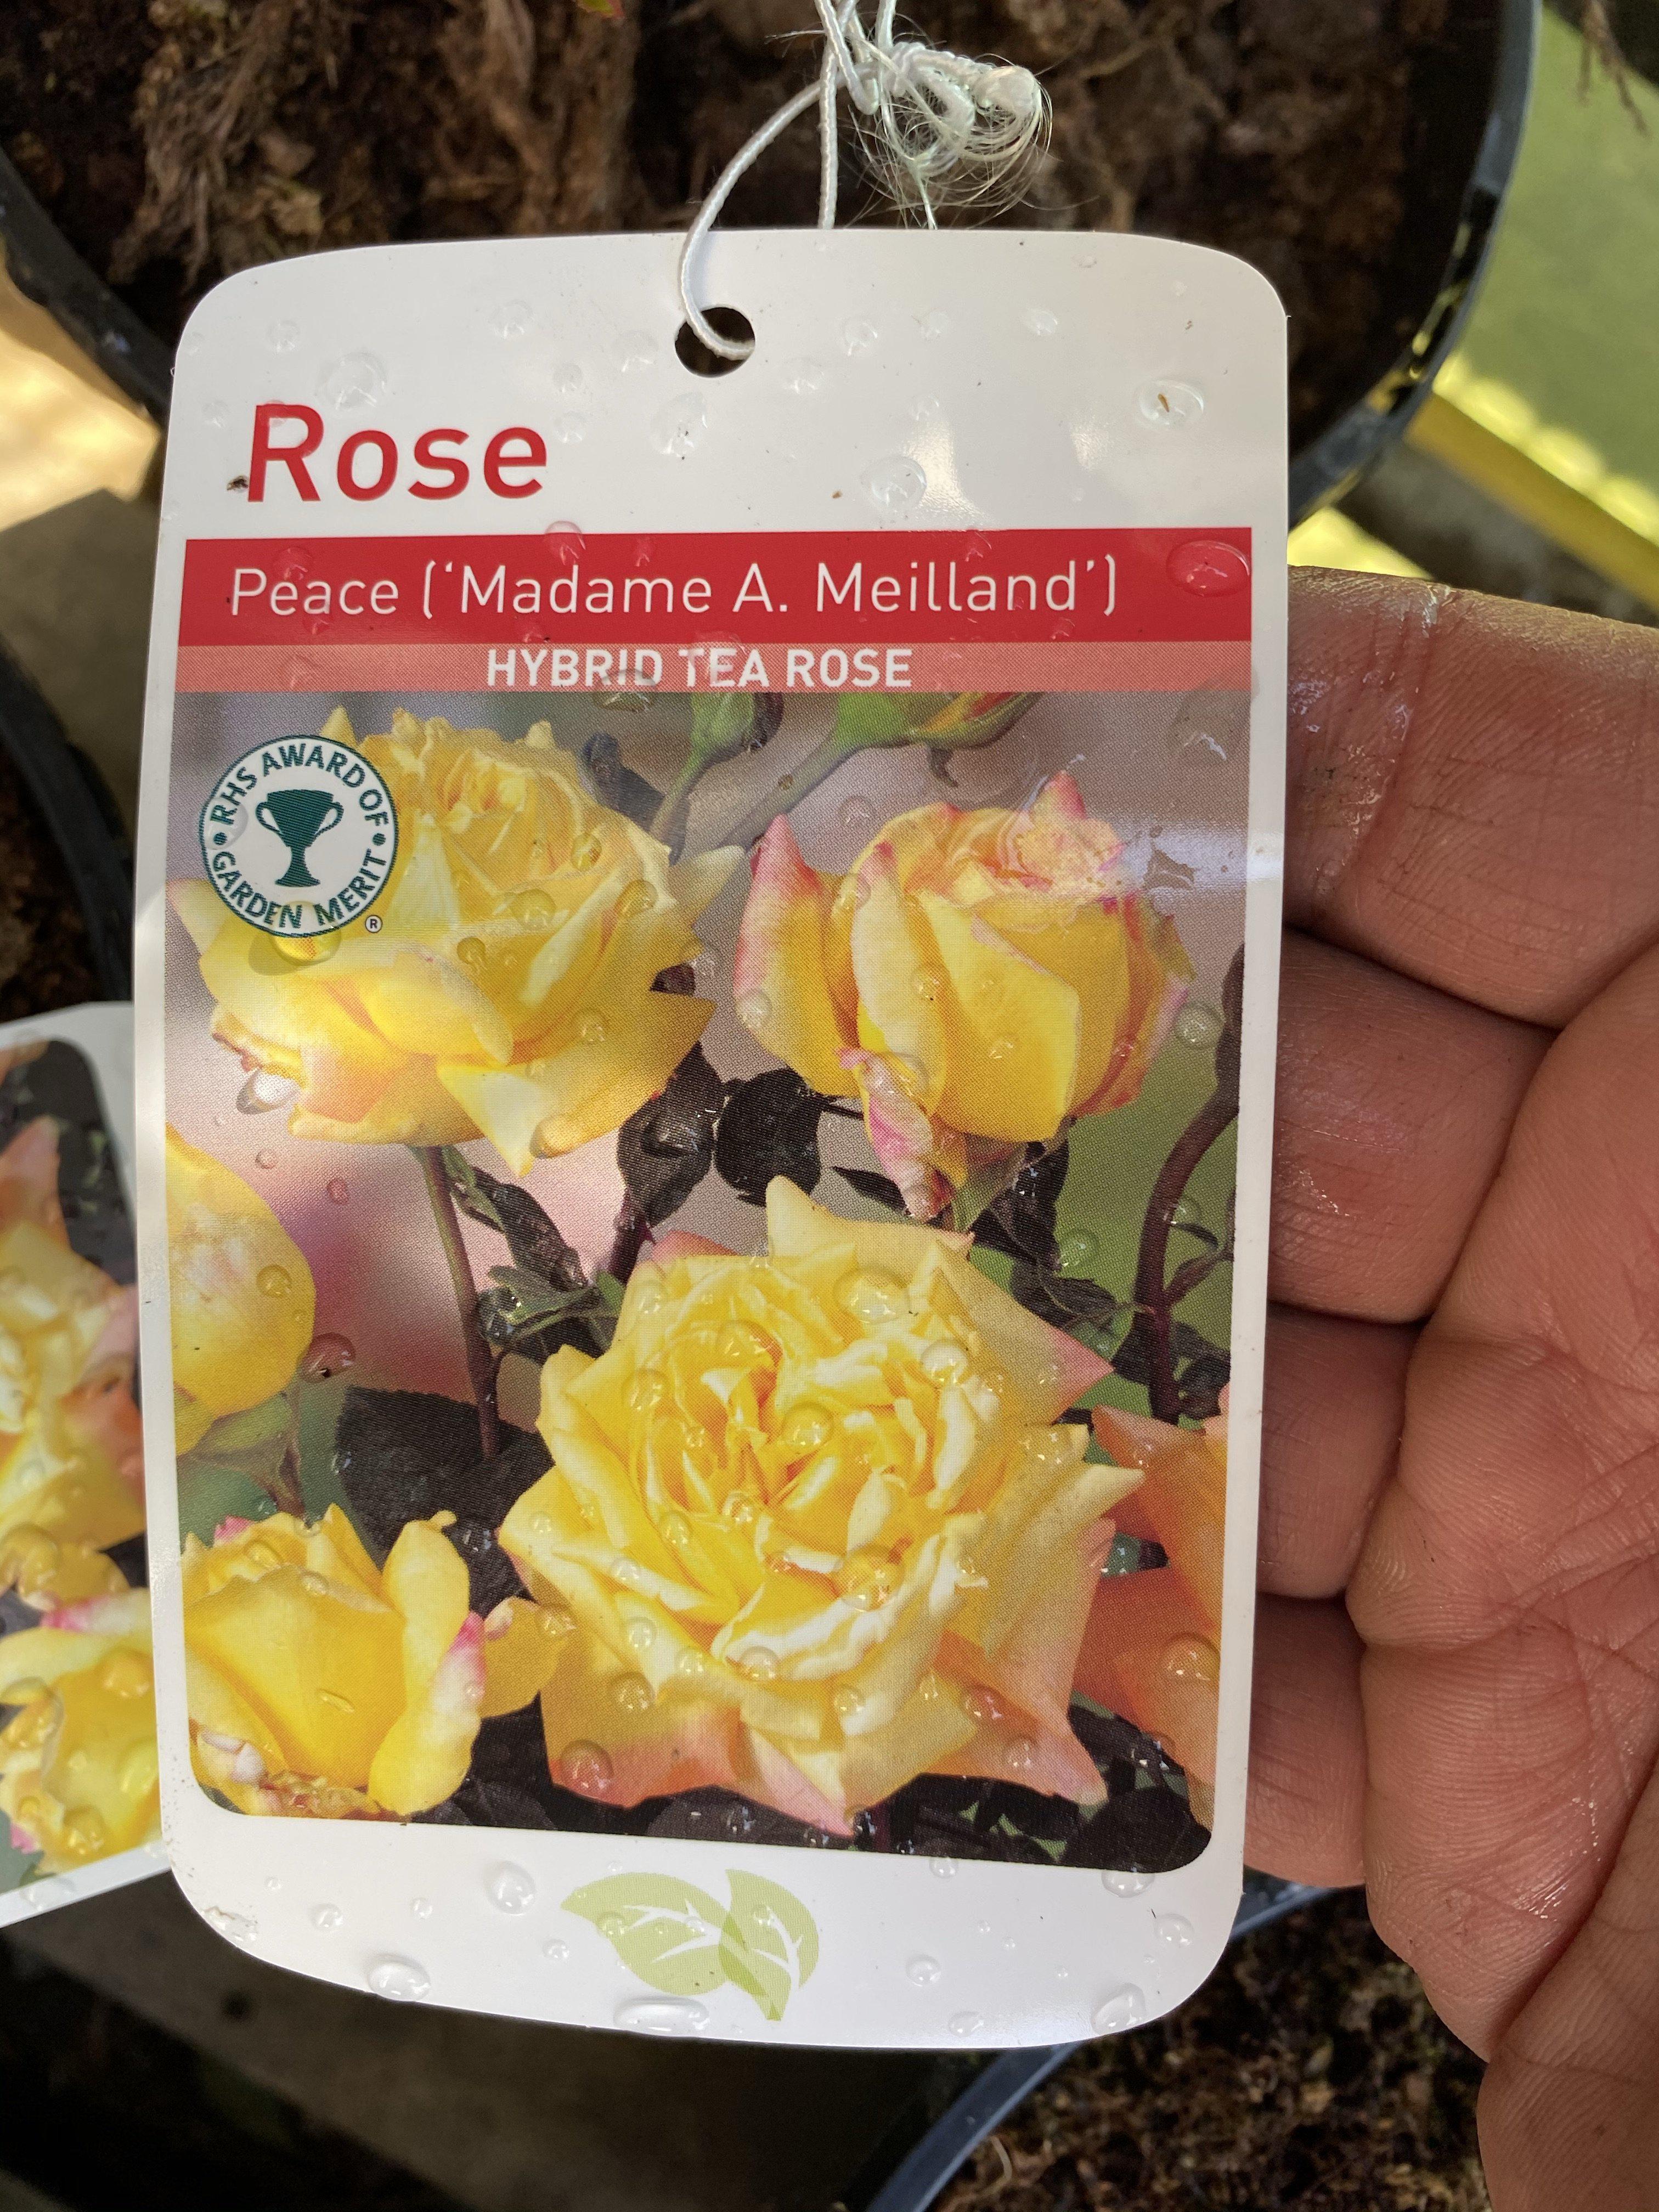 Rose “Peace”